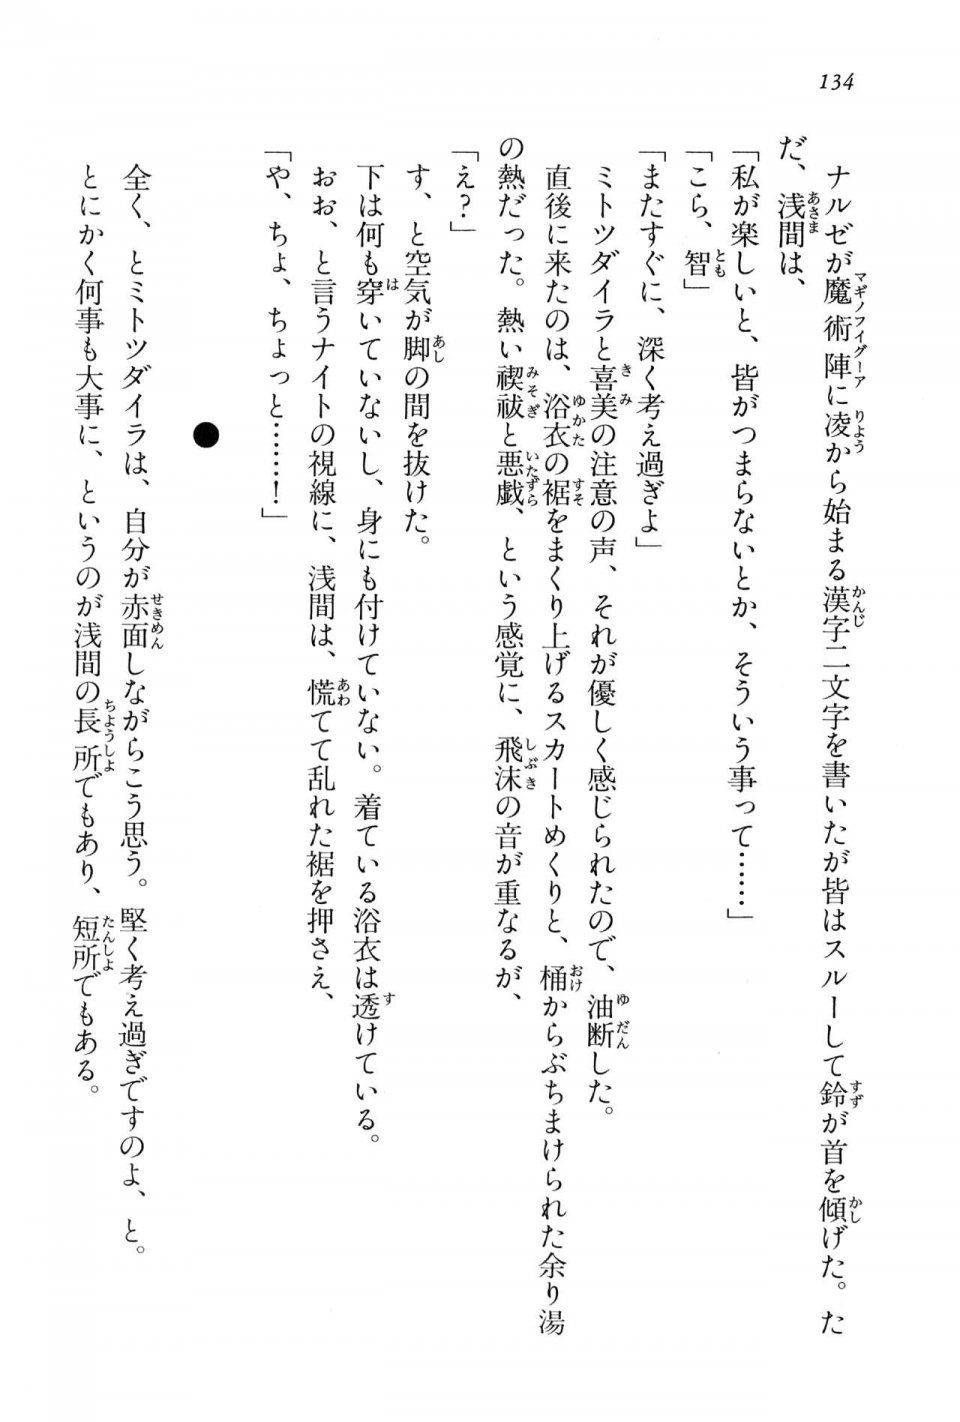 Kyoukai Senjou no Horizon BD Special Mininovel Vol 4(2B) - Photo #138